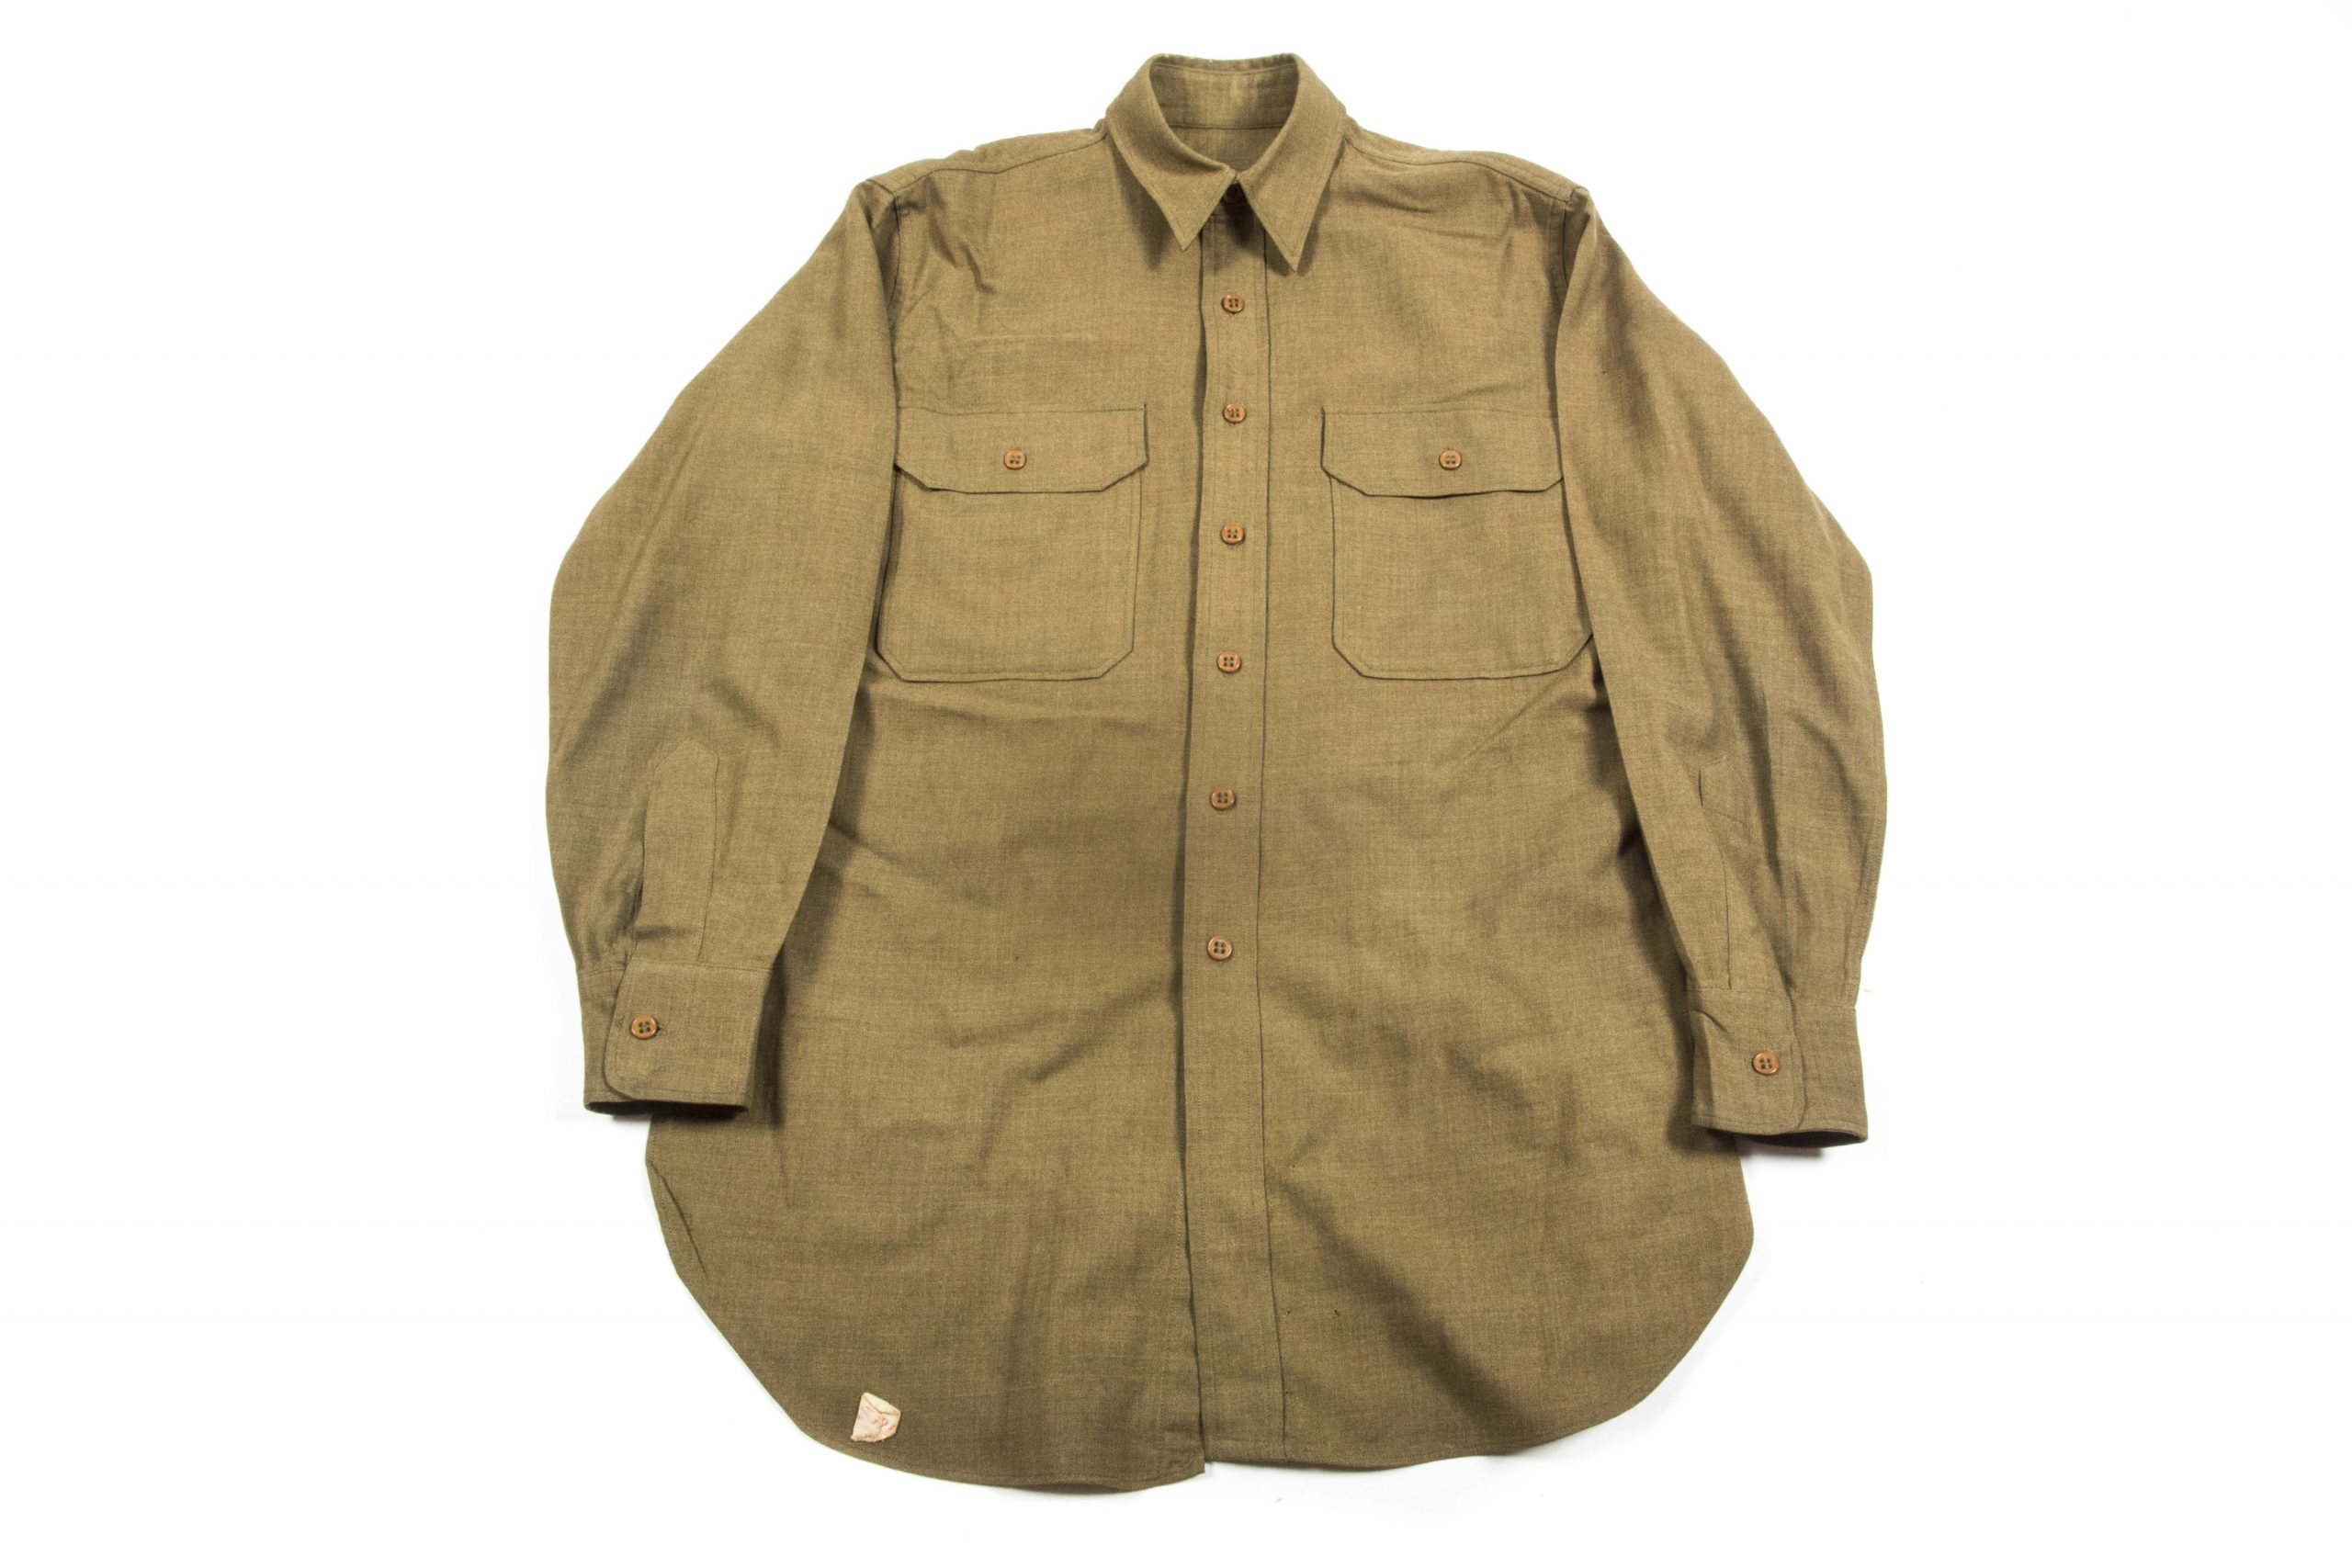 US Army shirt named Deehan – fjm44